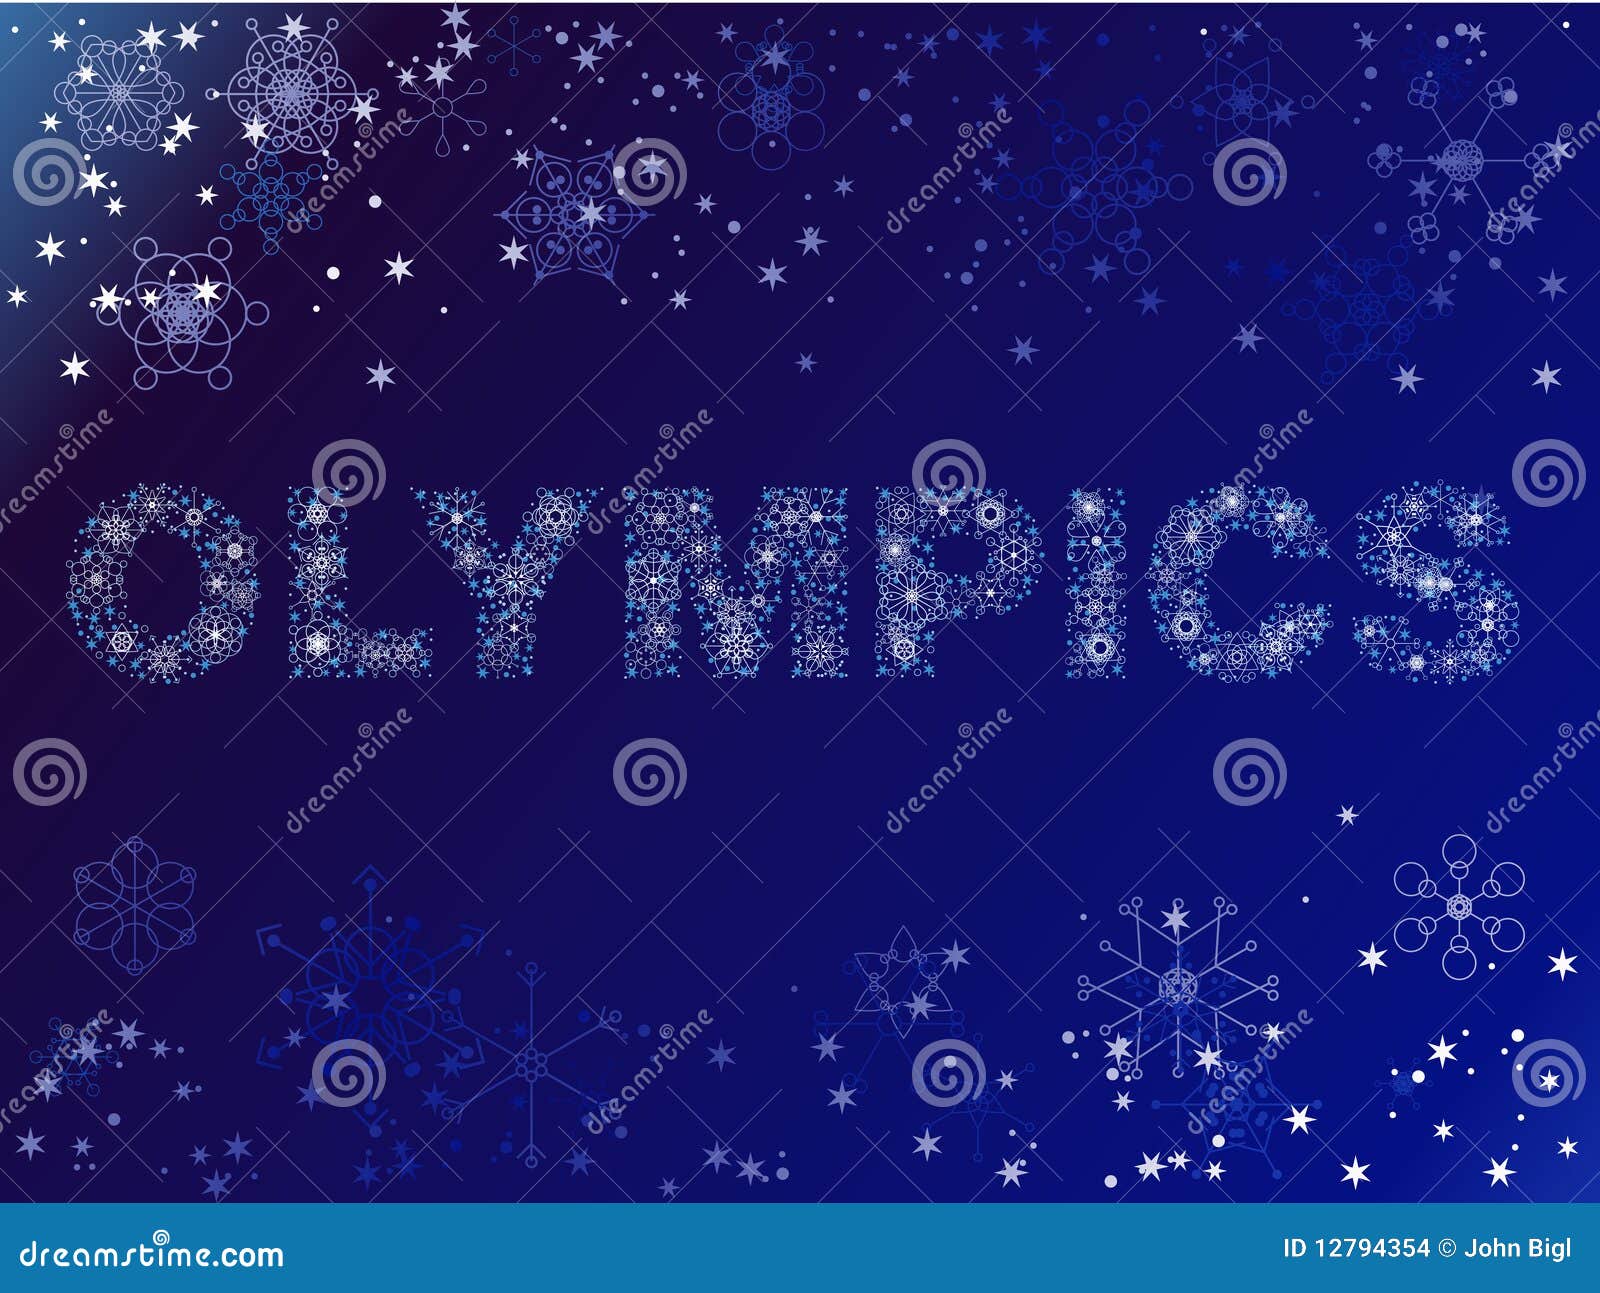 olympics made of snow